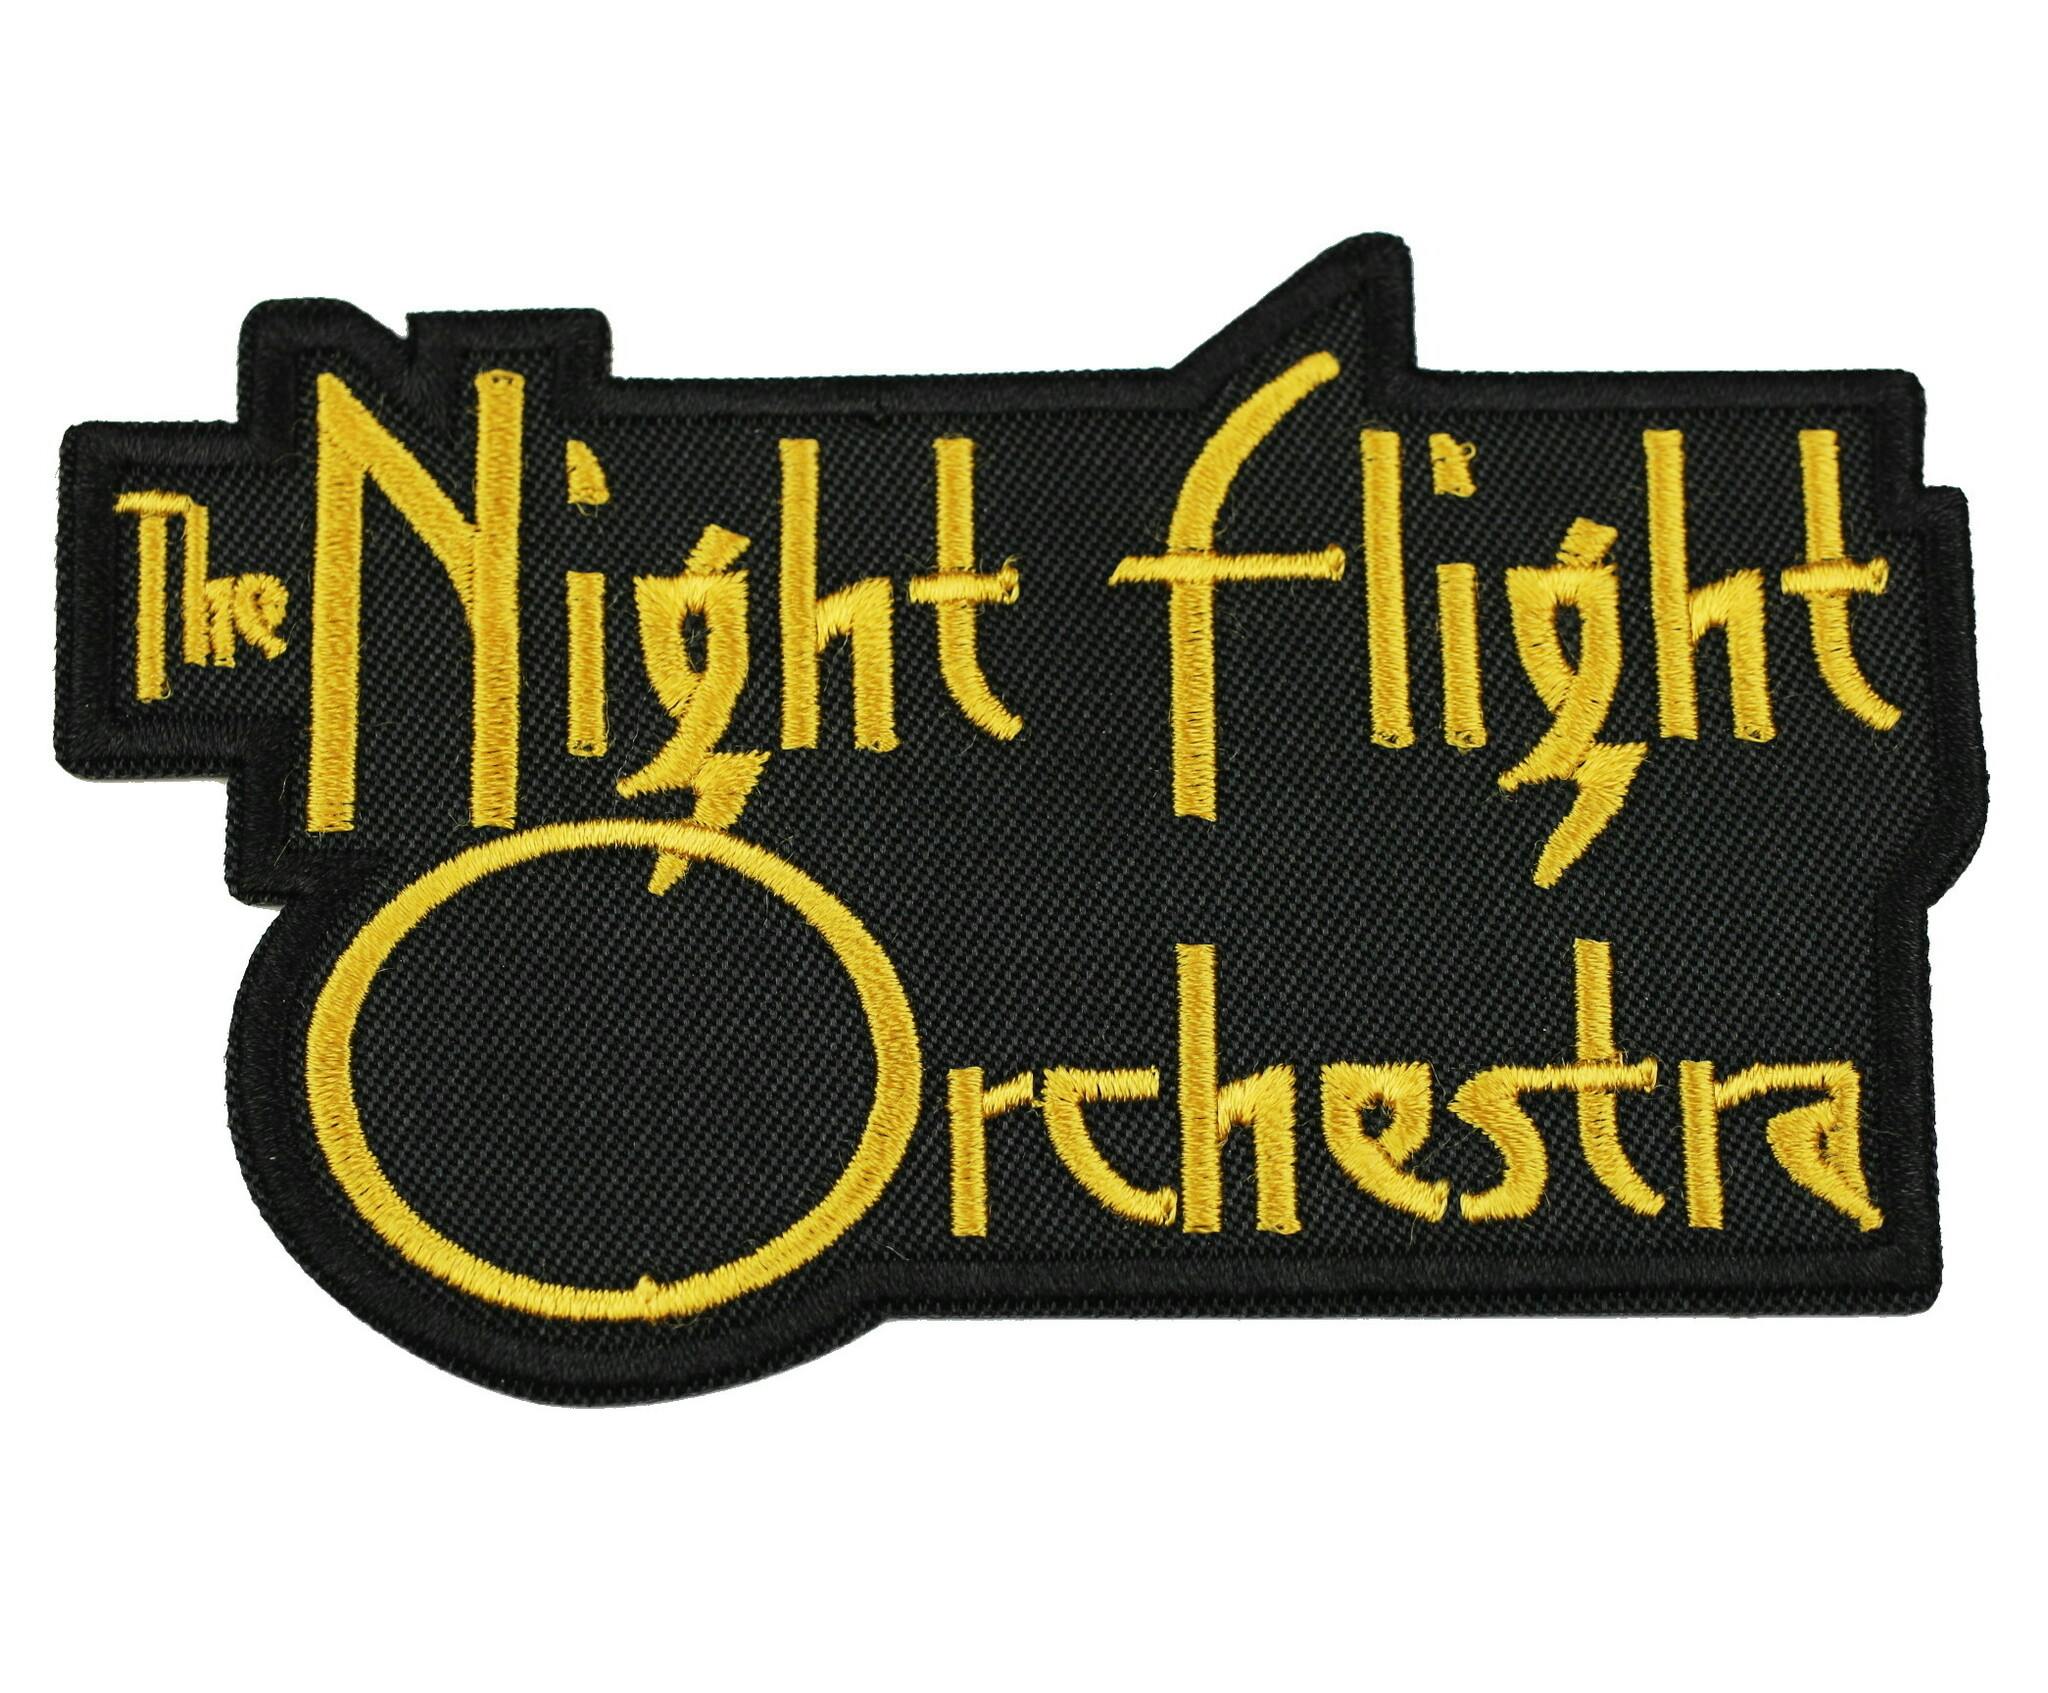 Night flight orchestra logo patch